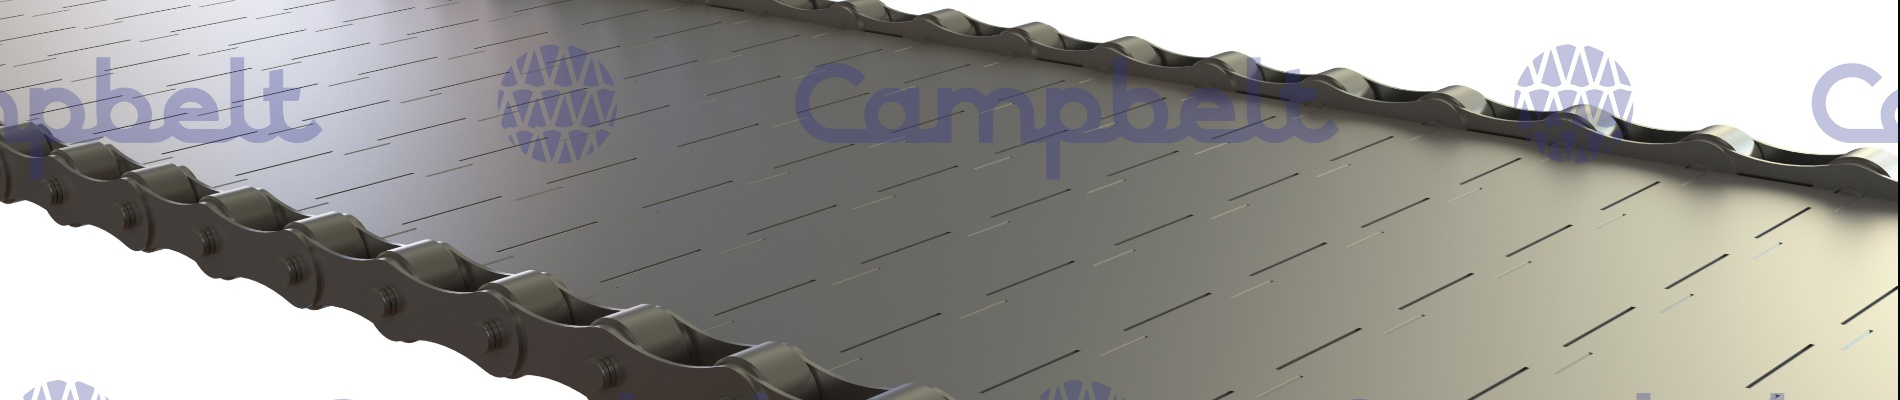 Campbelt | Plate link belts (CT-LP)